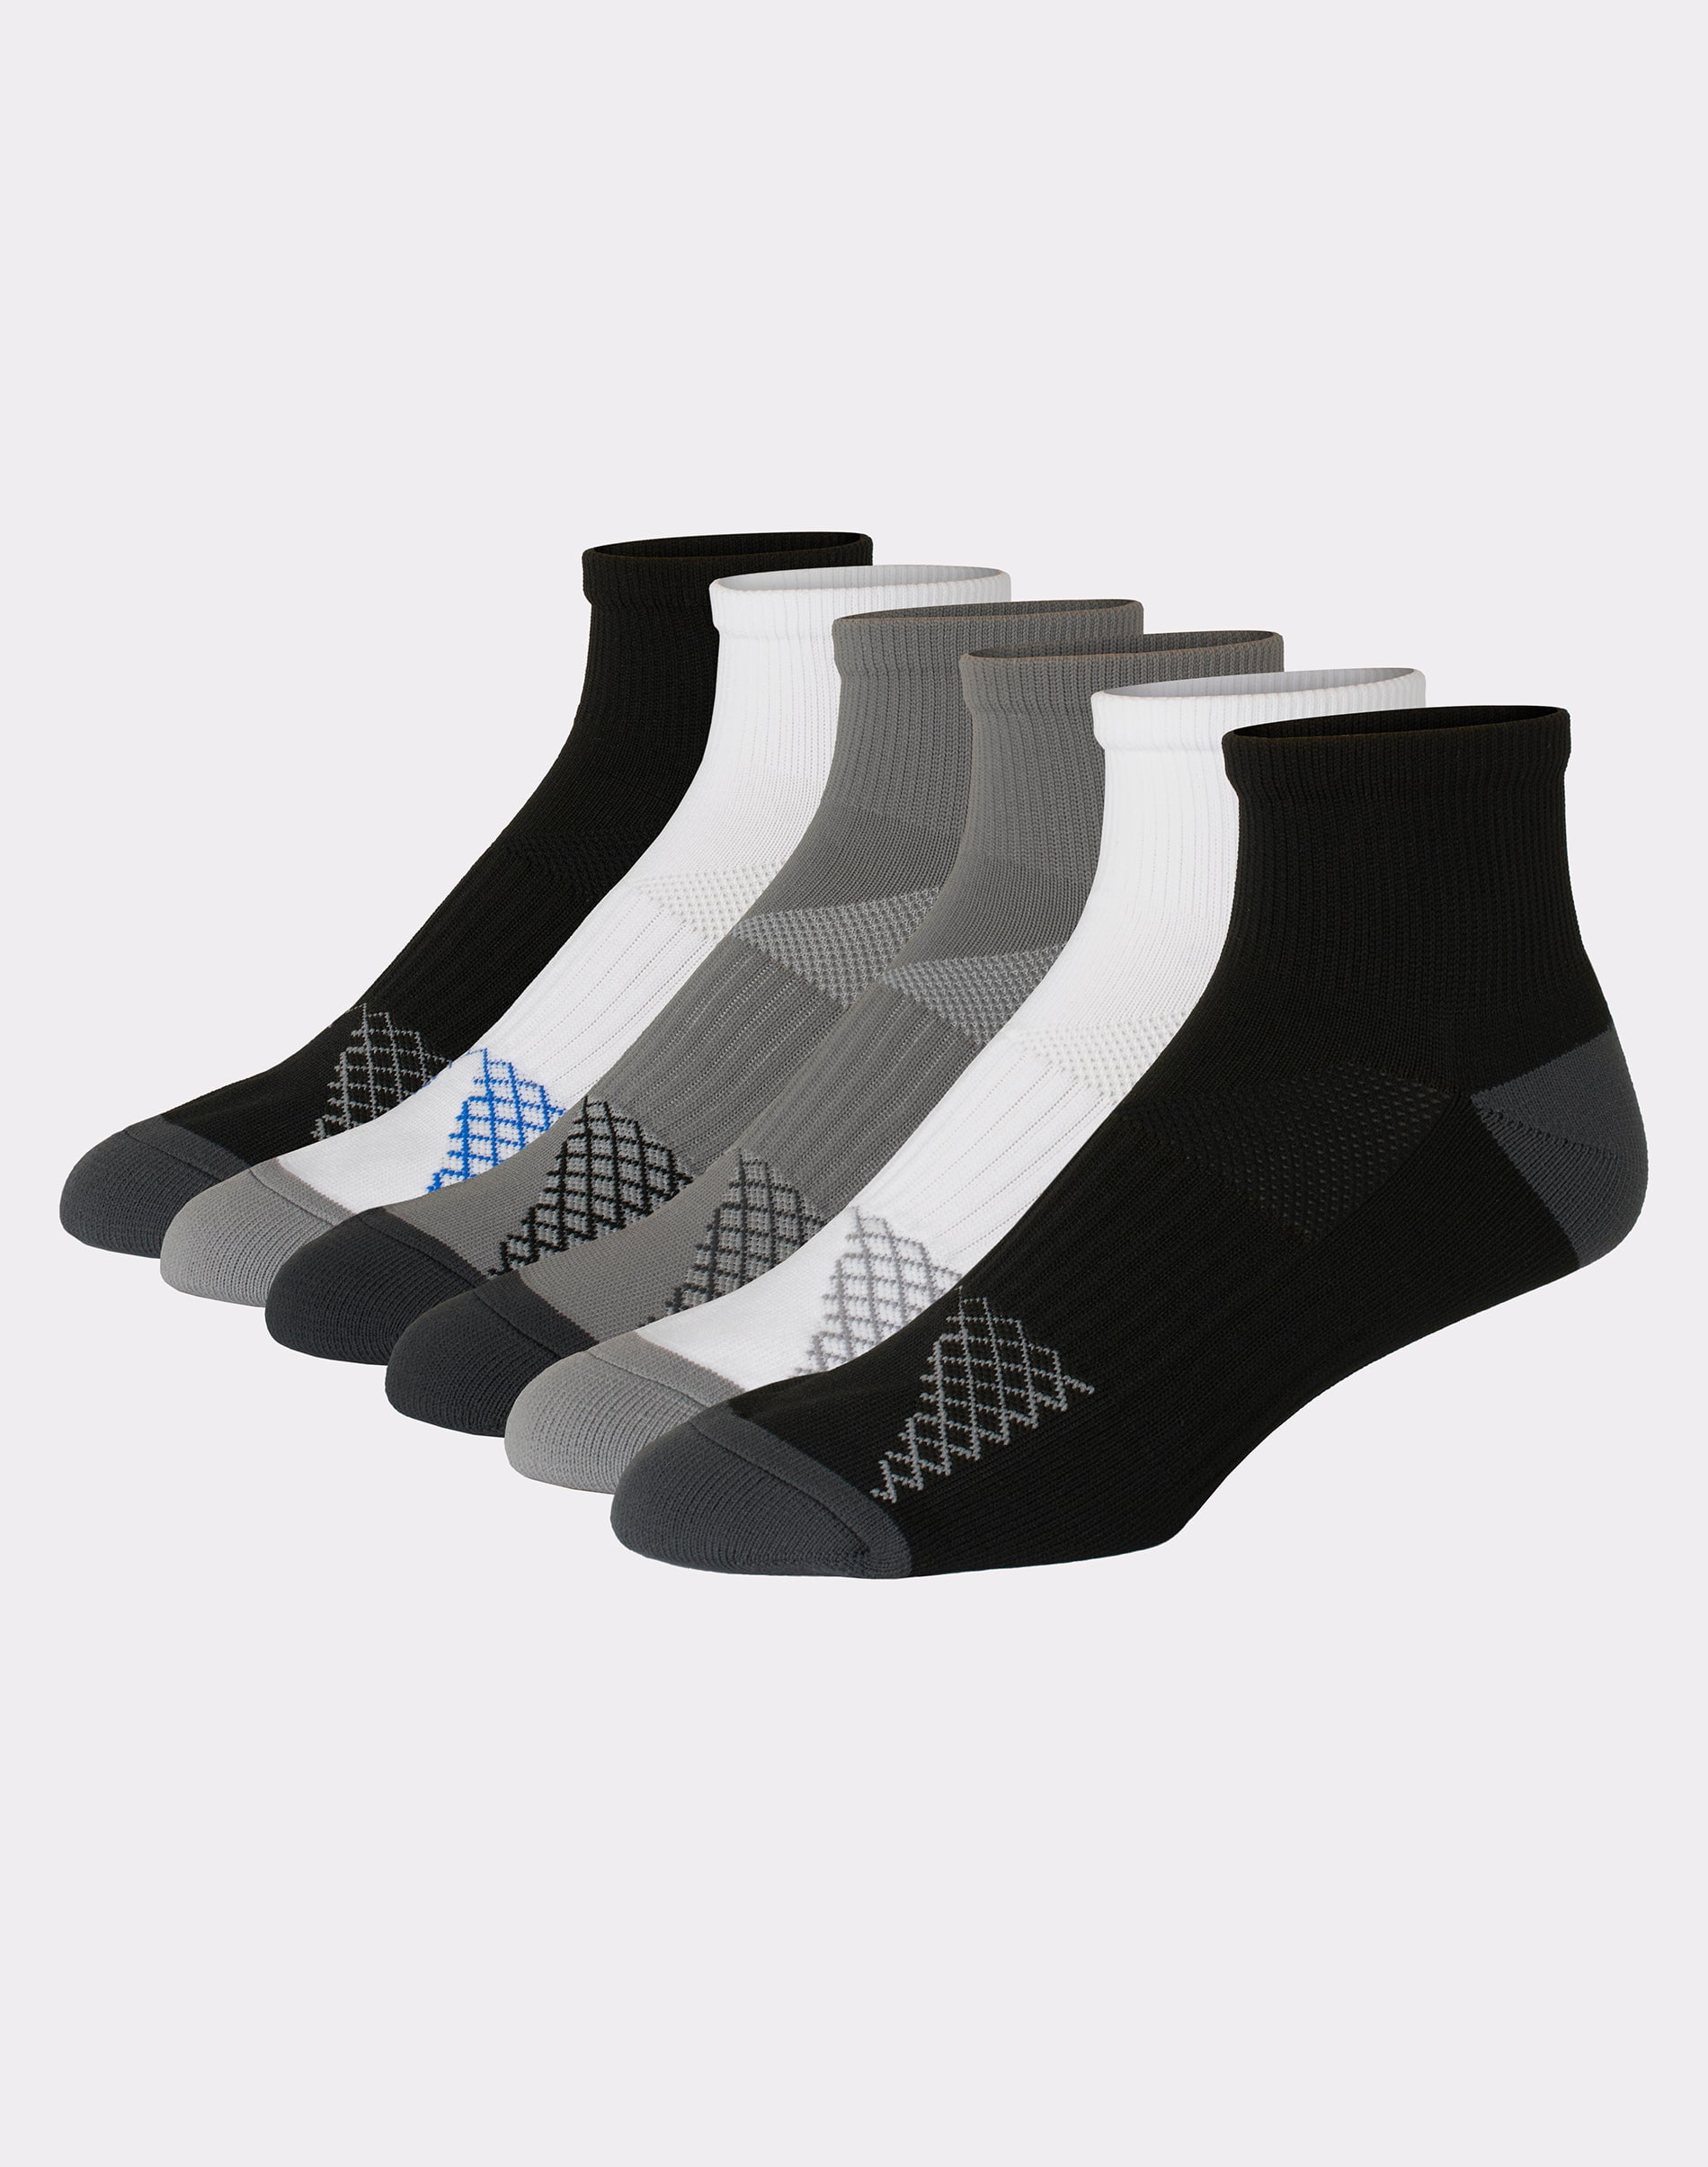 Hanes X-Temp Men's Performance Ankle Socks, Shoe Sizes 6-12, 6-Pairs ...